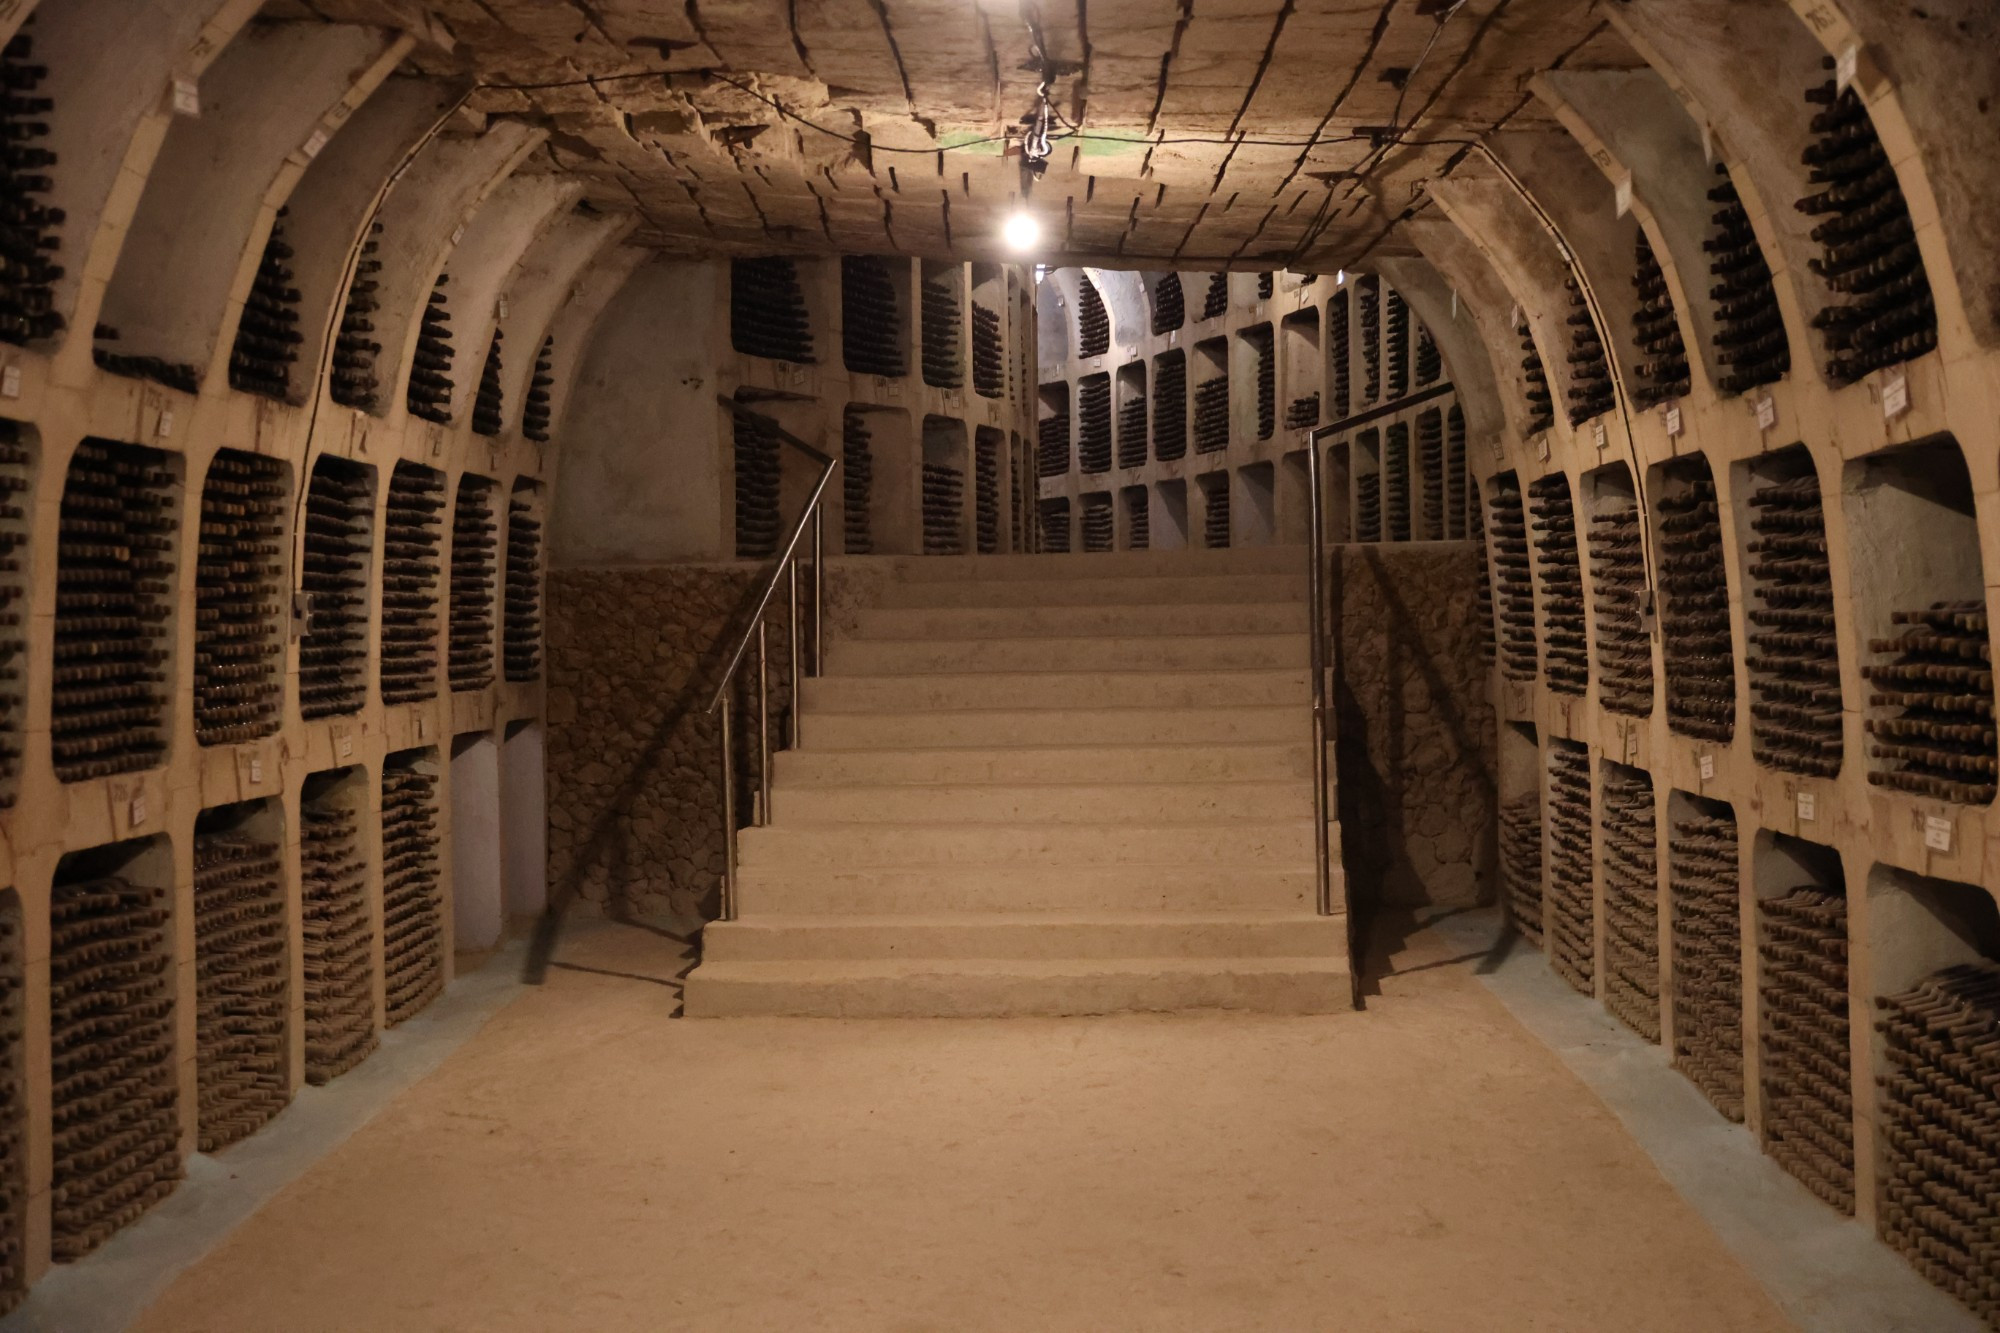 Underground Cellars from Milestii Micii, Молдова